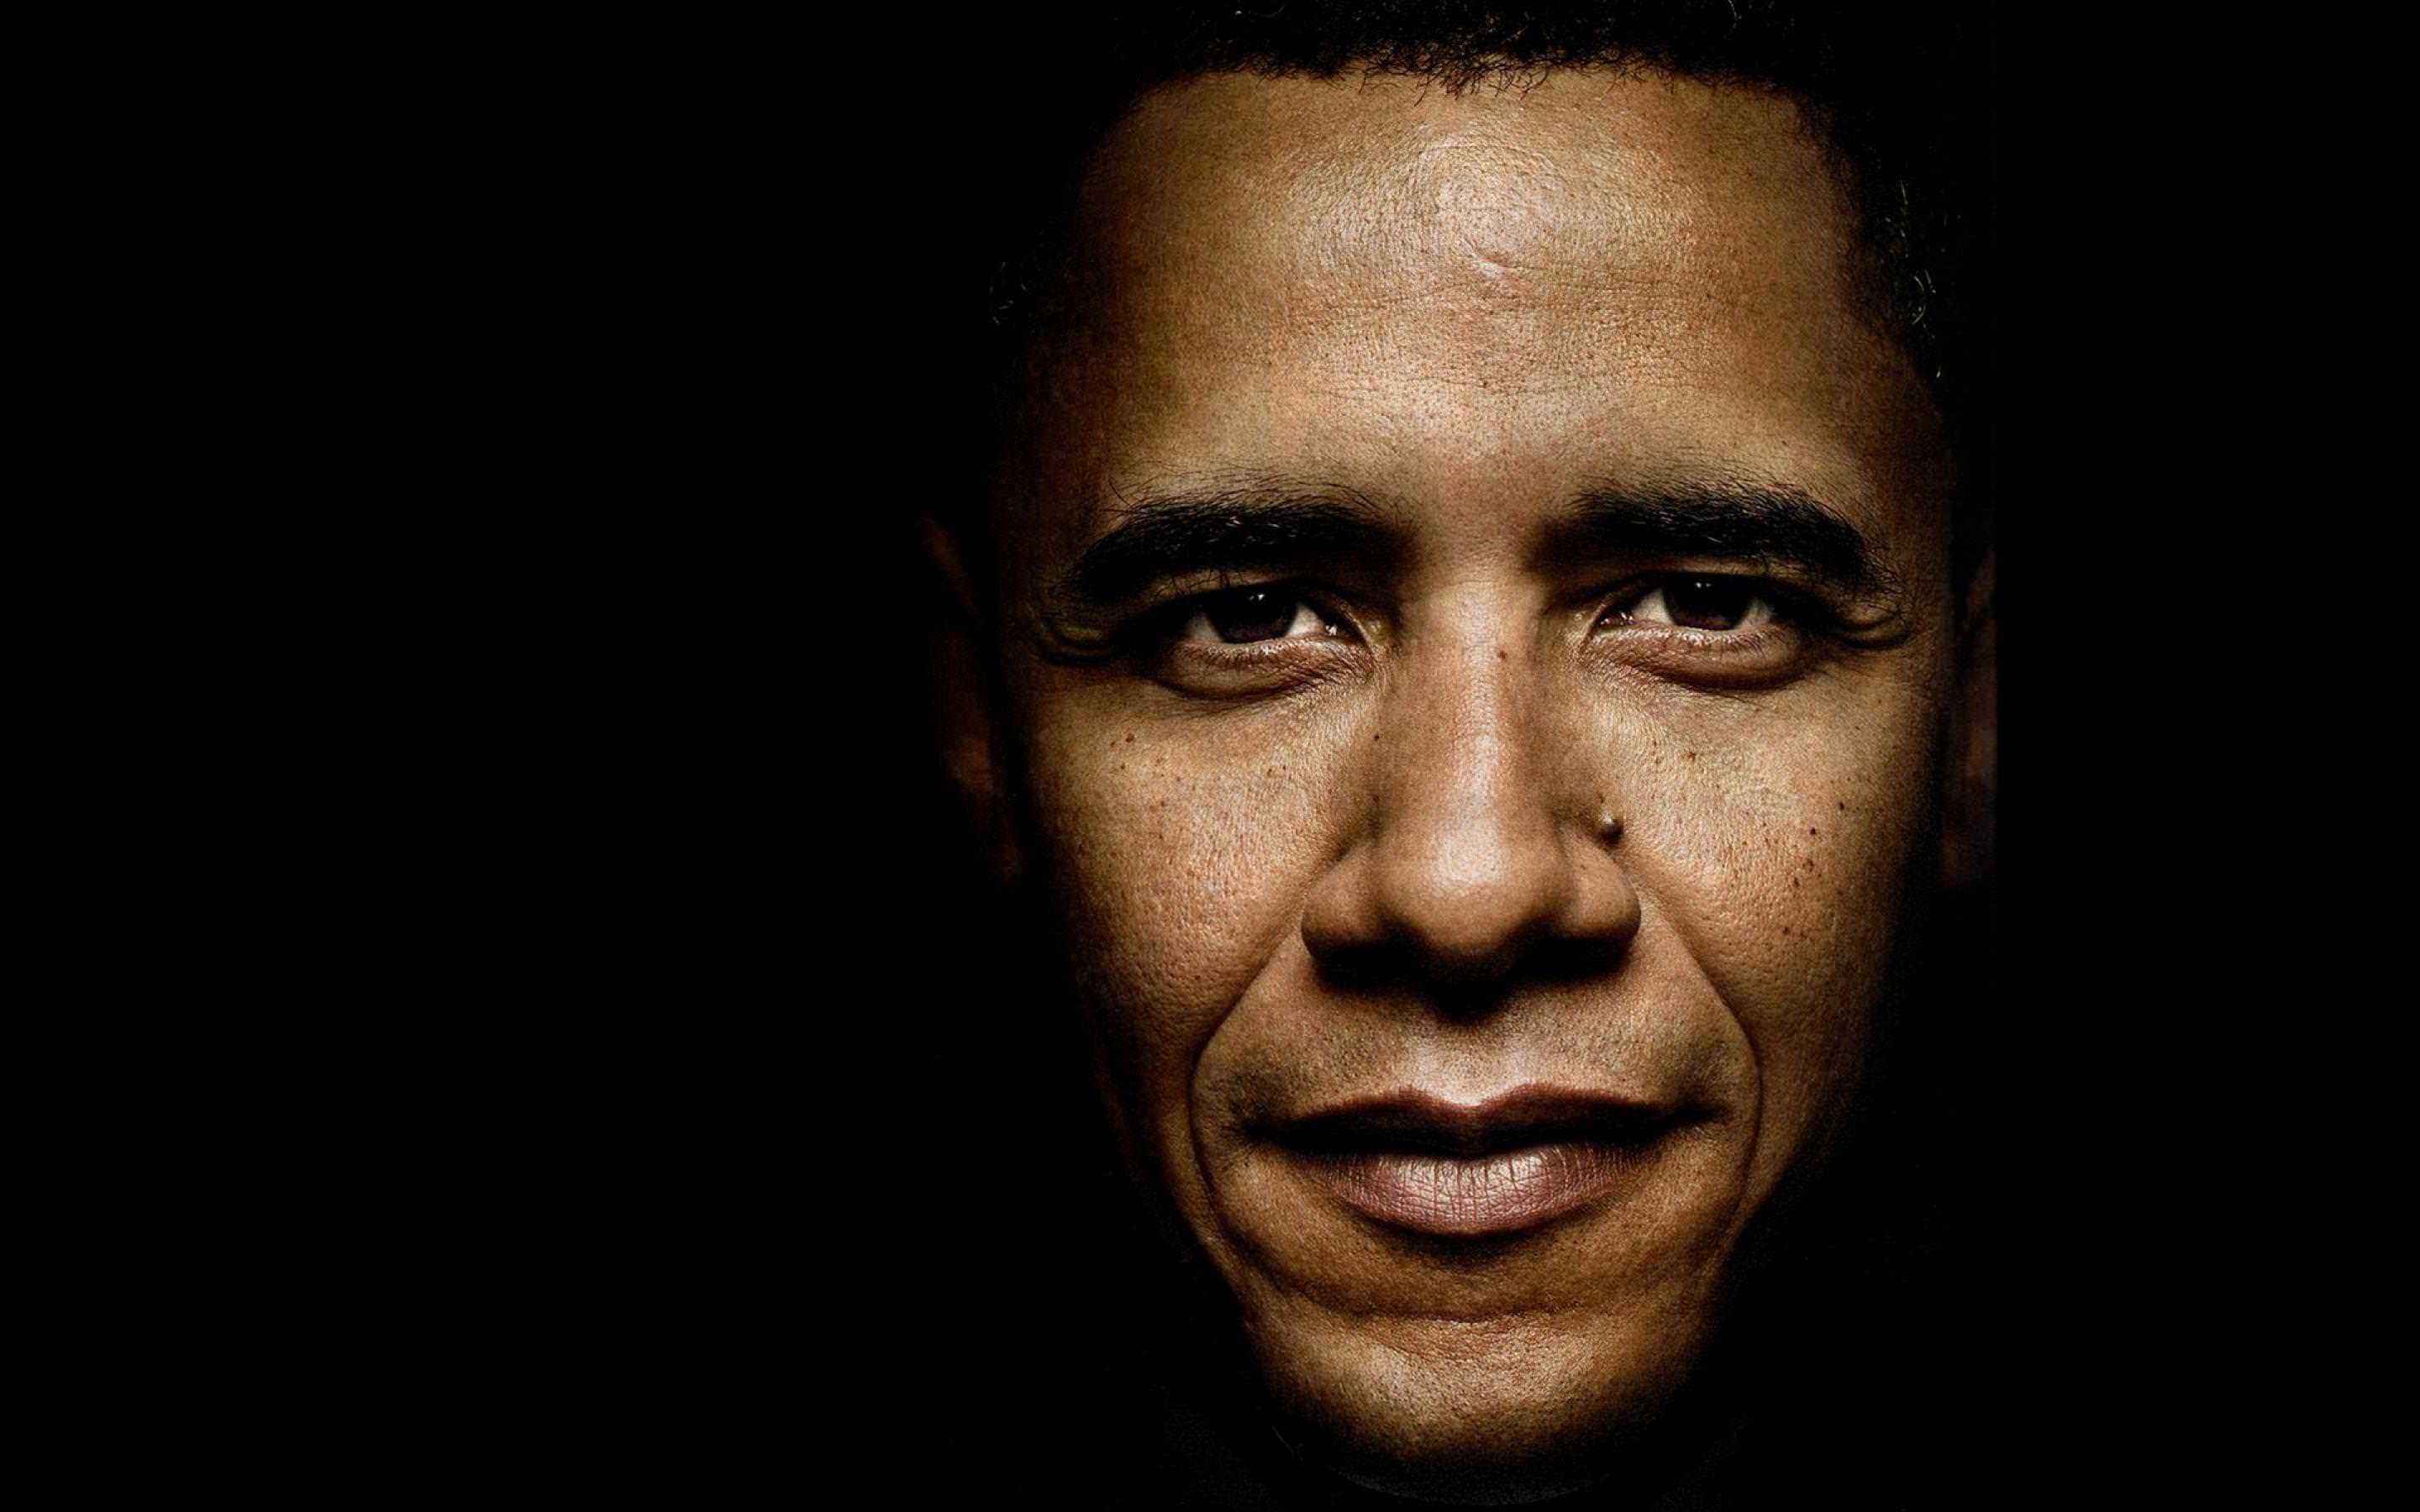 President Barack Obama Portrait Wallpaper for Desktop 2880x1800